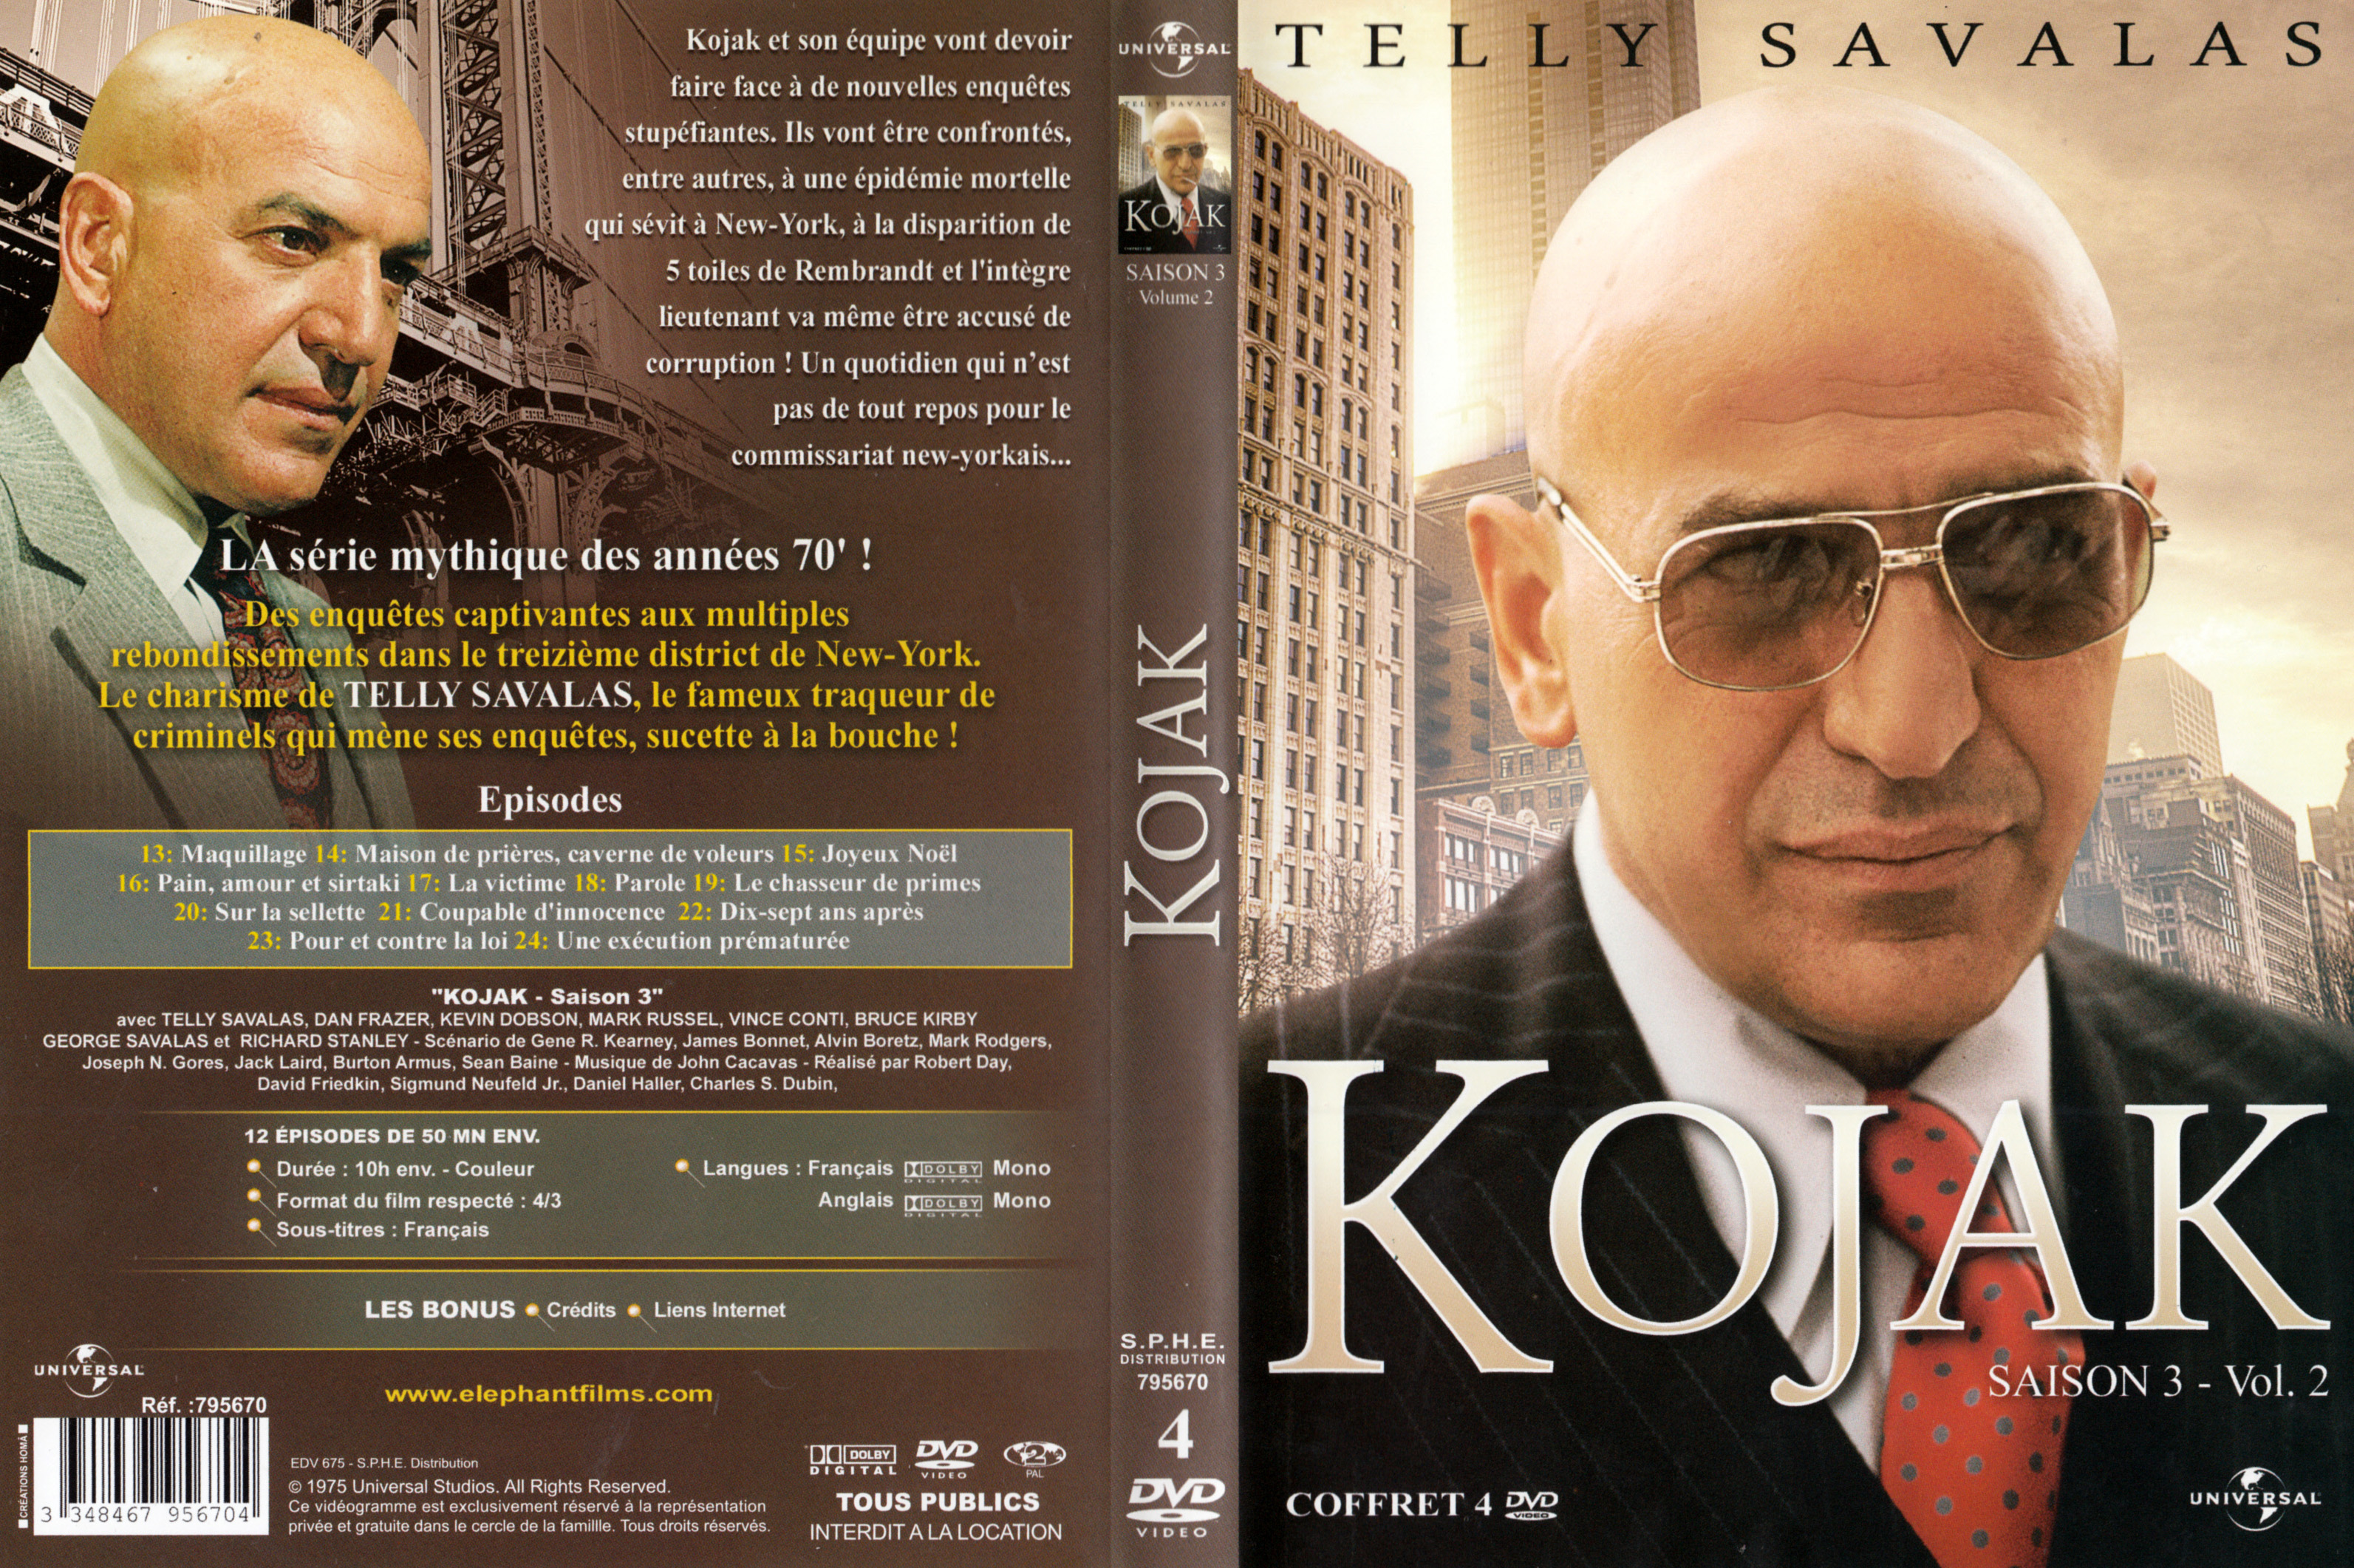 Jaquette DVD Kojak saison 3 vol 02